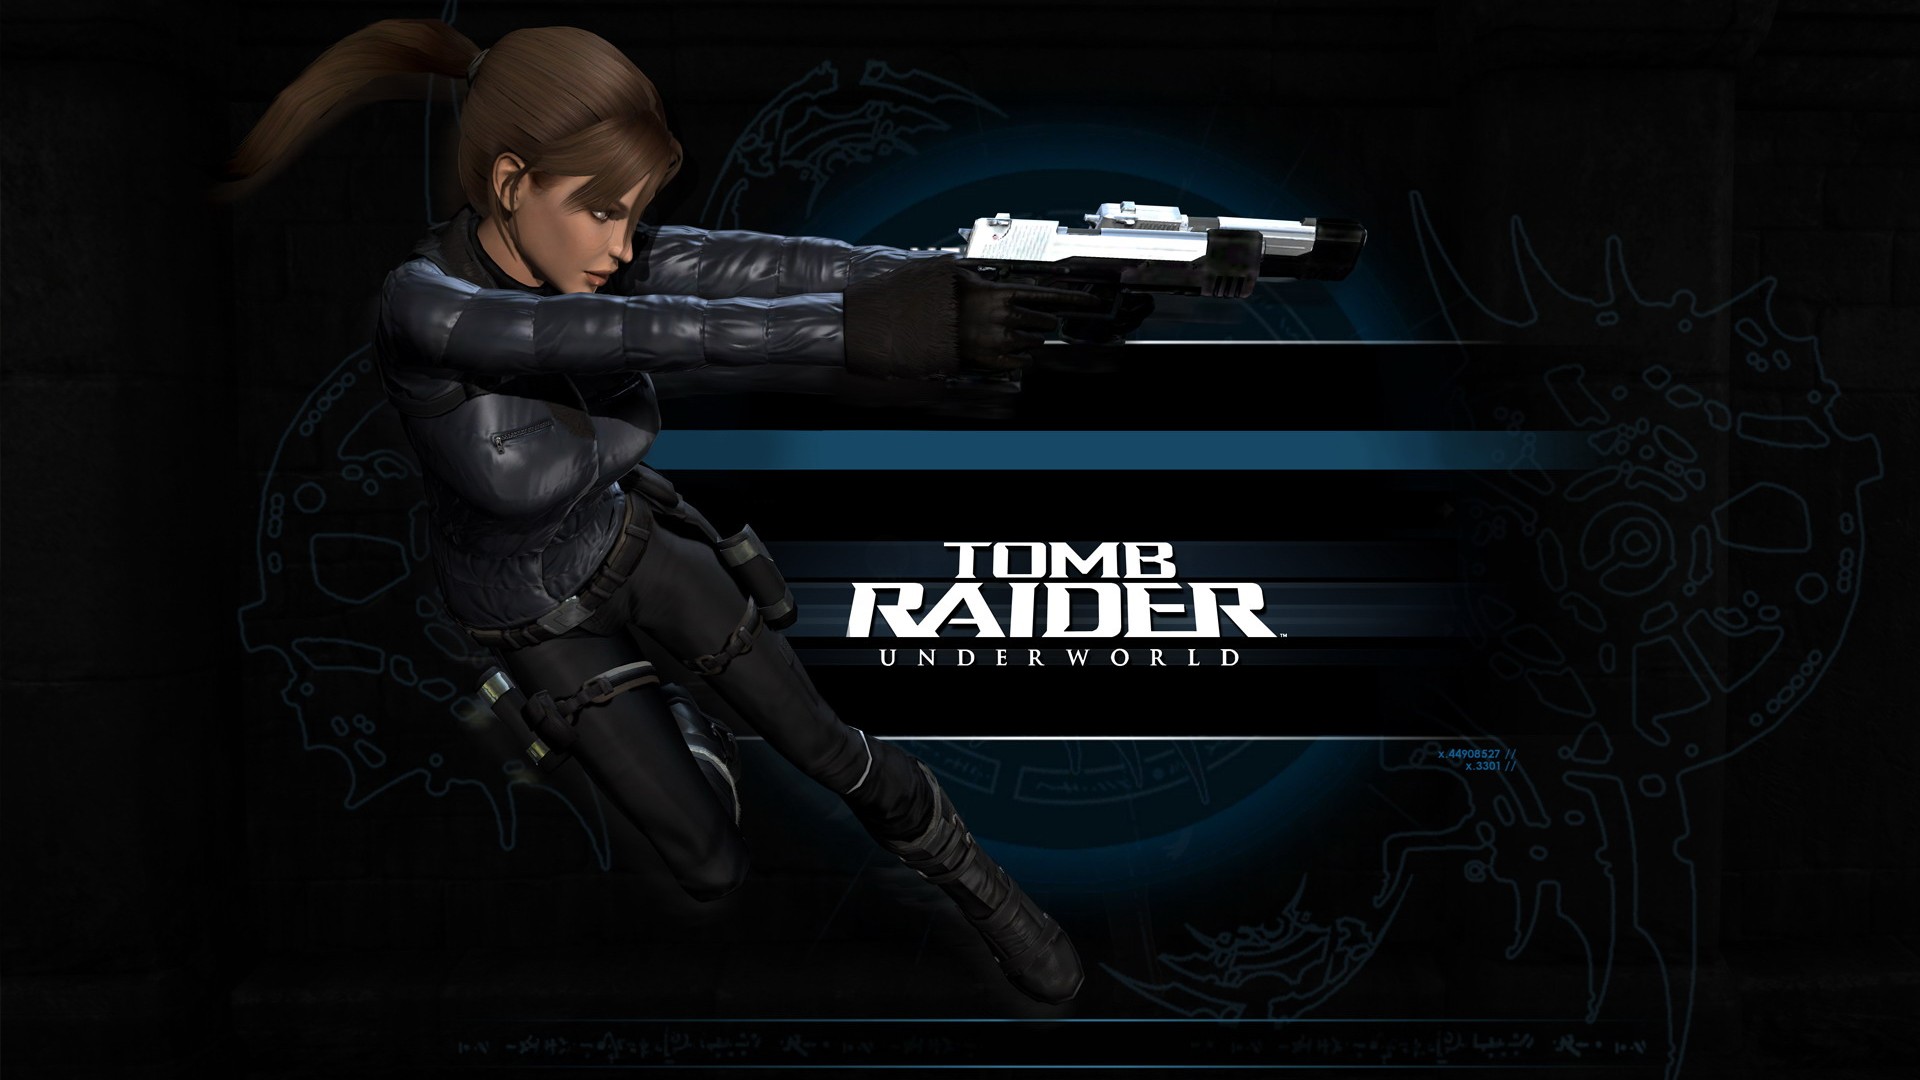 Lara Croft Tomb Raider Underworld 8 #7 - 1920x1080